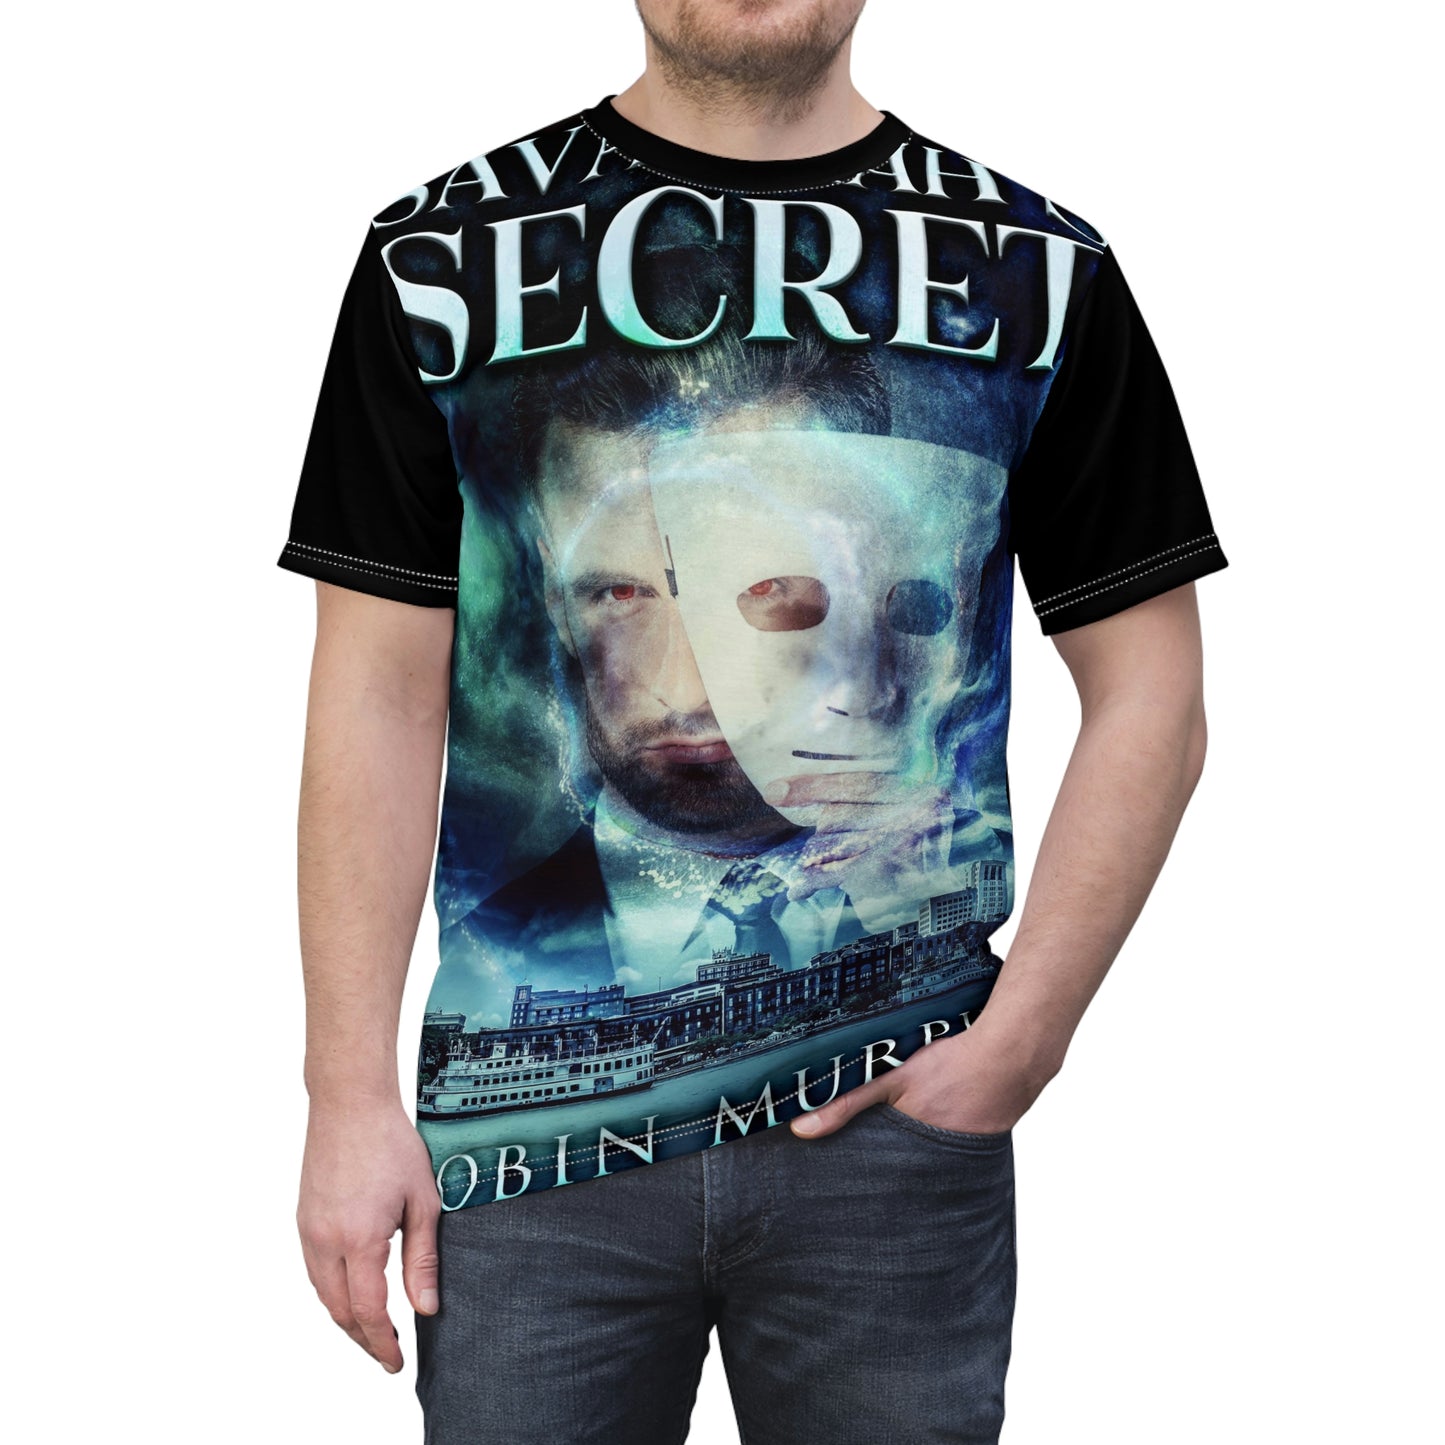 Savannah's Secret - Unisex All-Over Print Cut & Sew T-Shirt